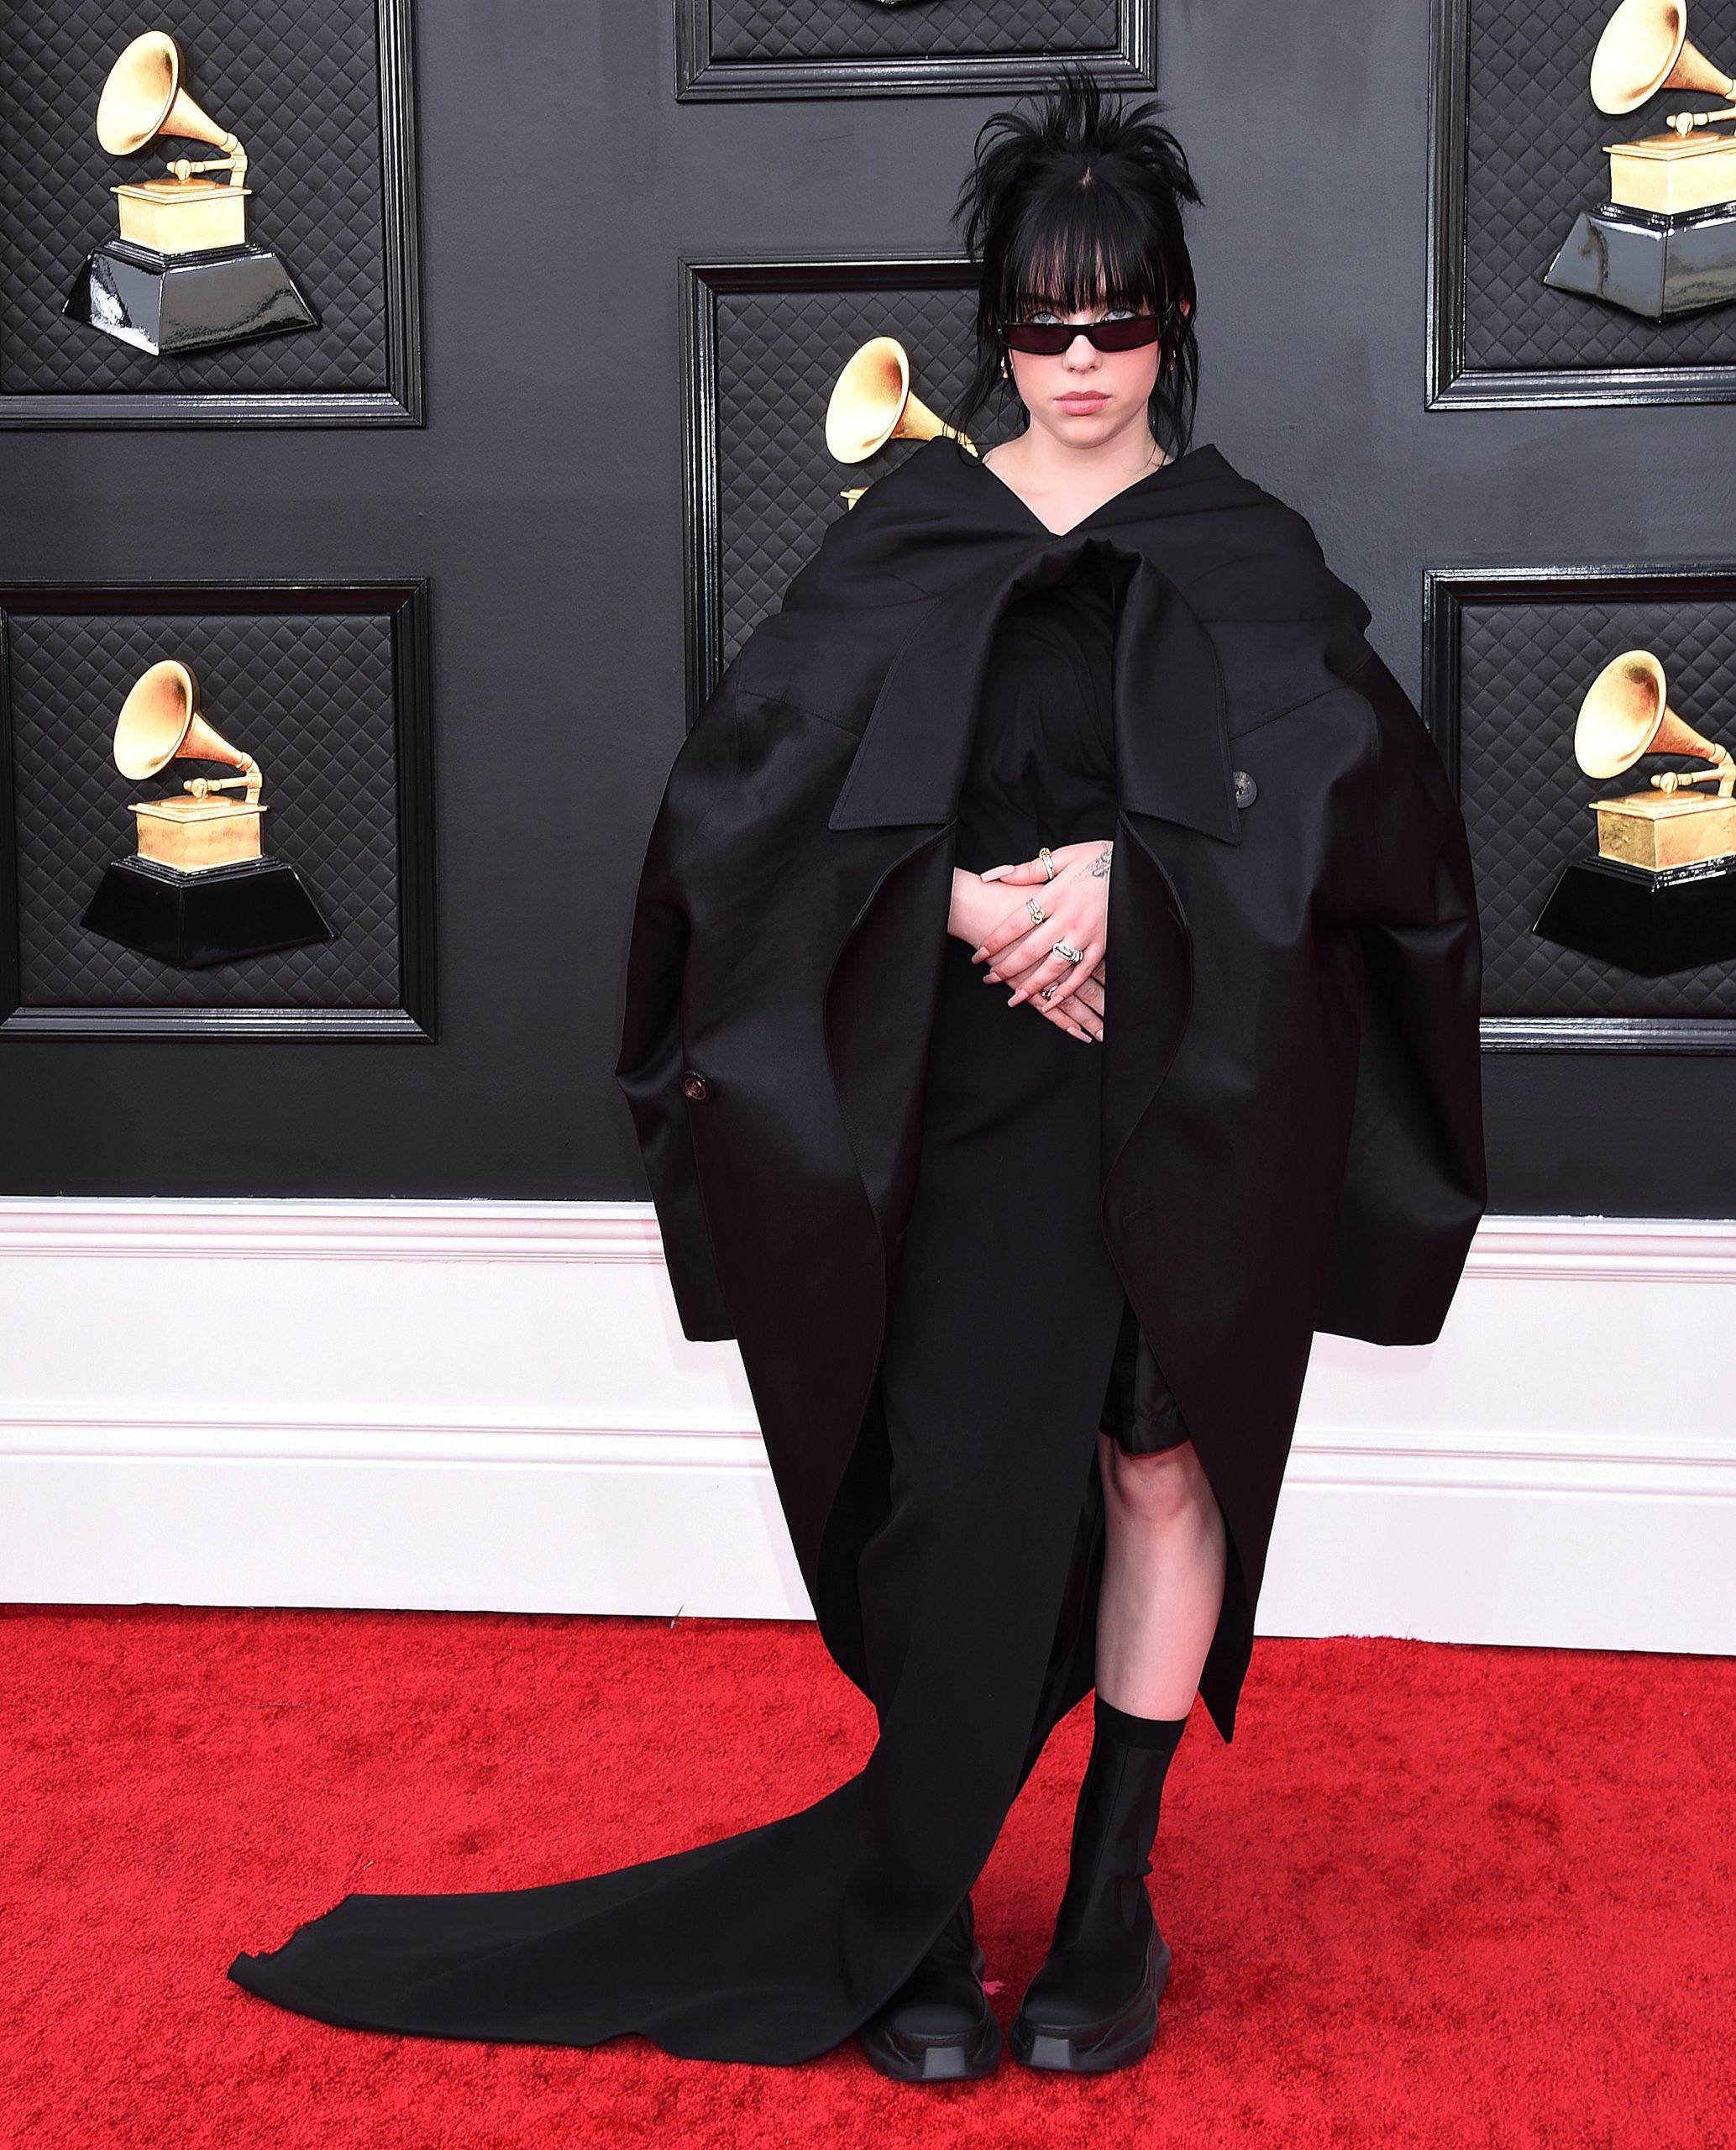 Billie Eilish attending the 64th Grammy Awards